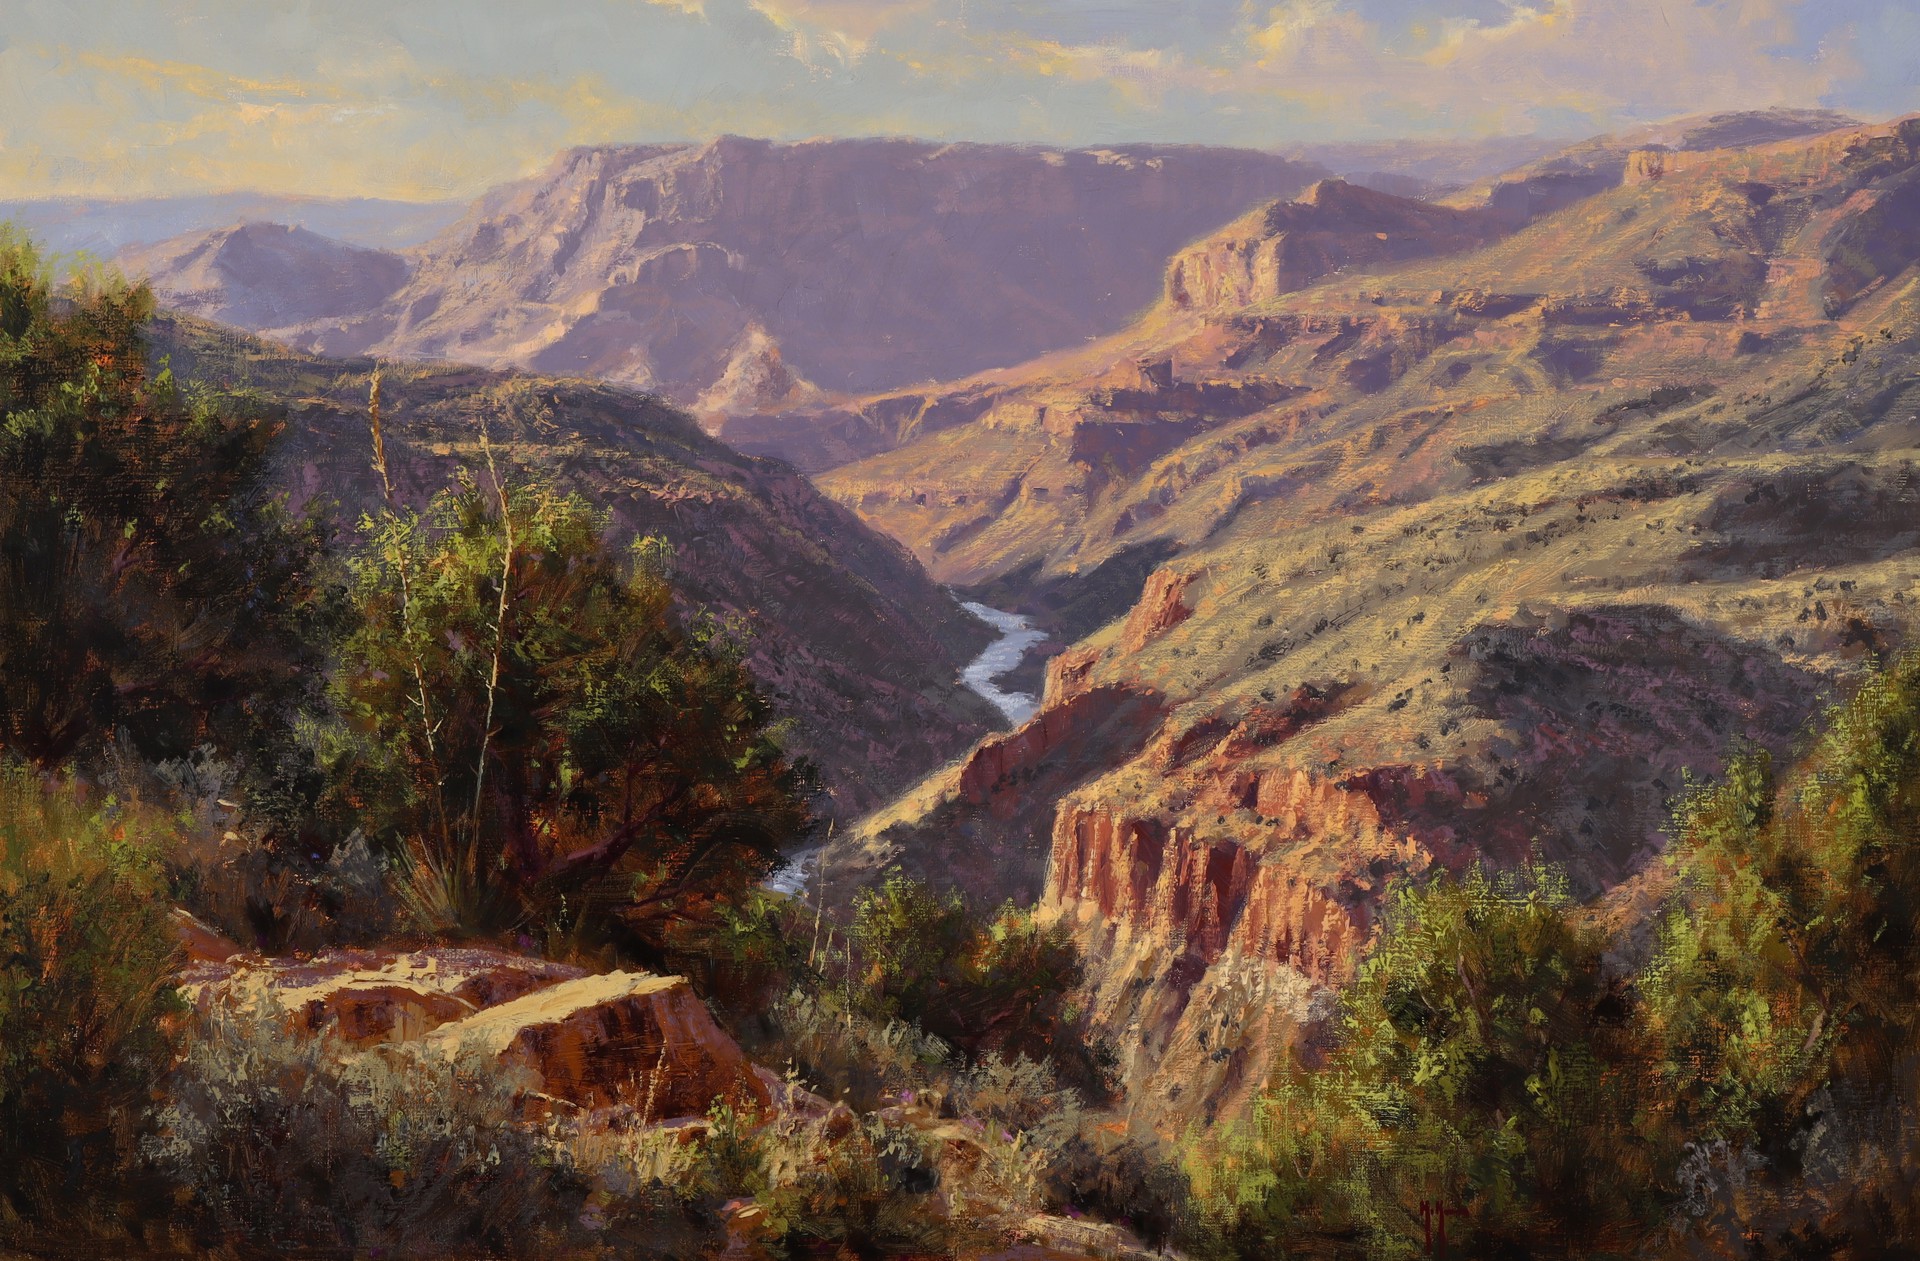 Salt River Canyon by Kenny McKenna